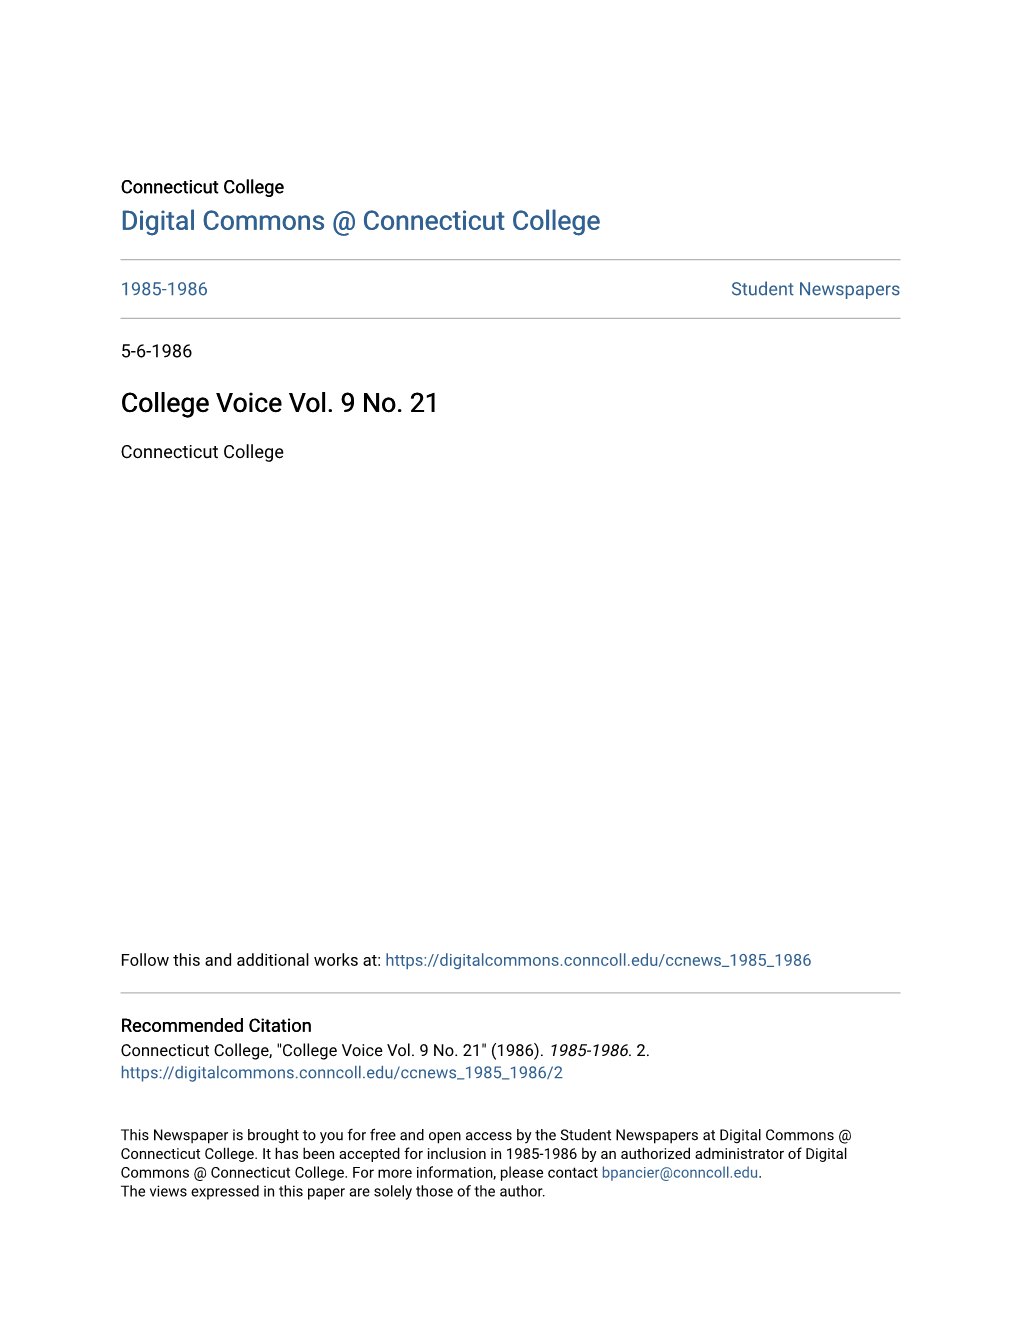 College Voice Vol. 9 No. 21